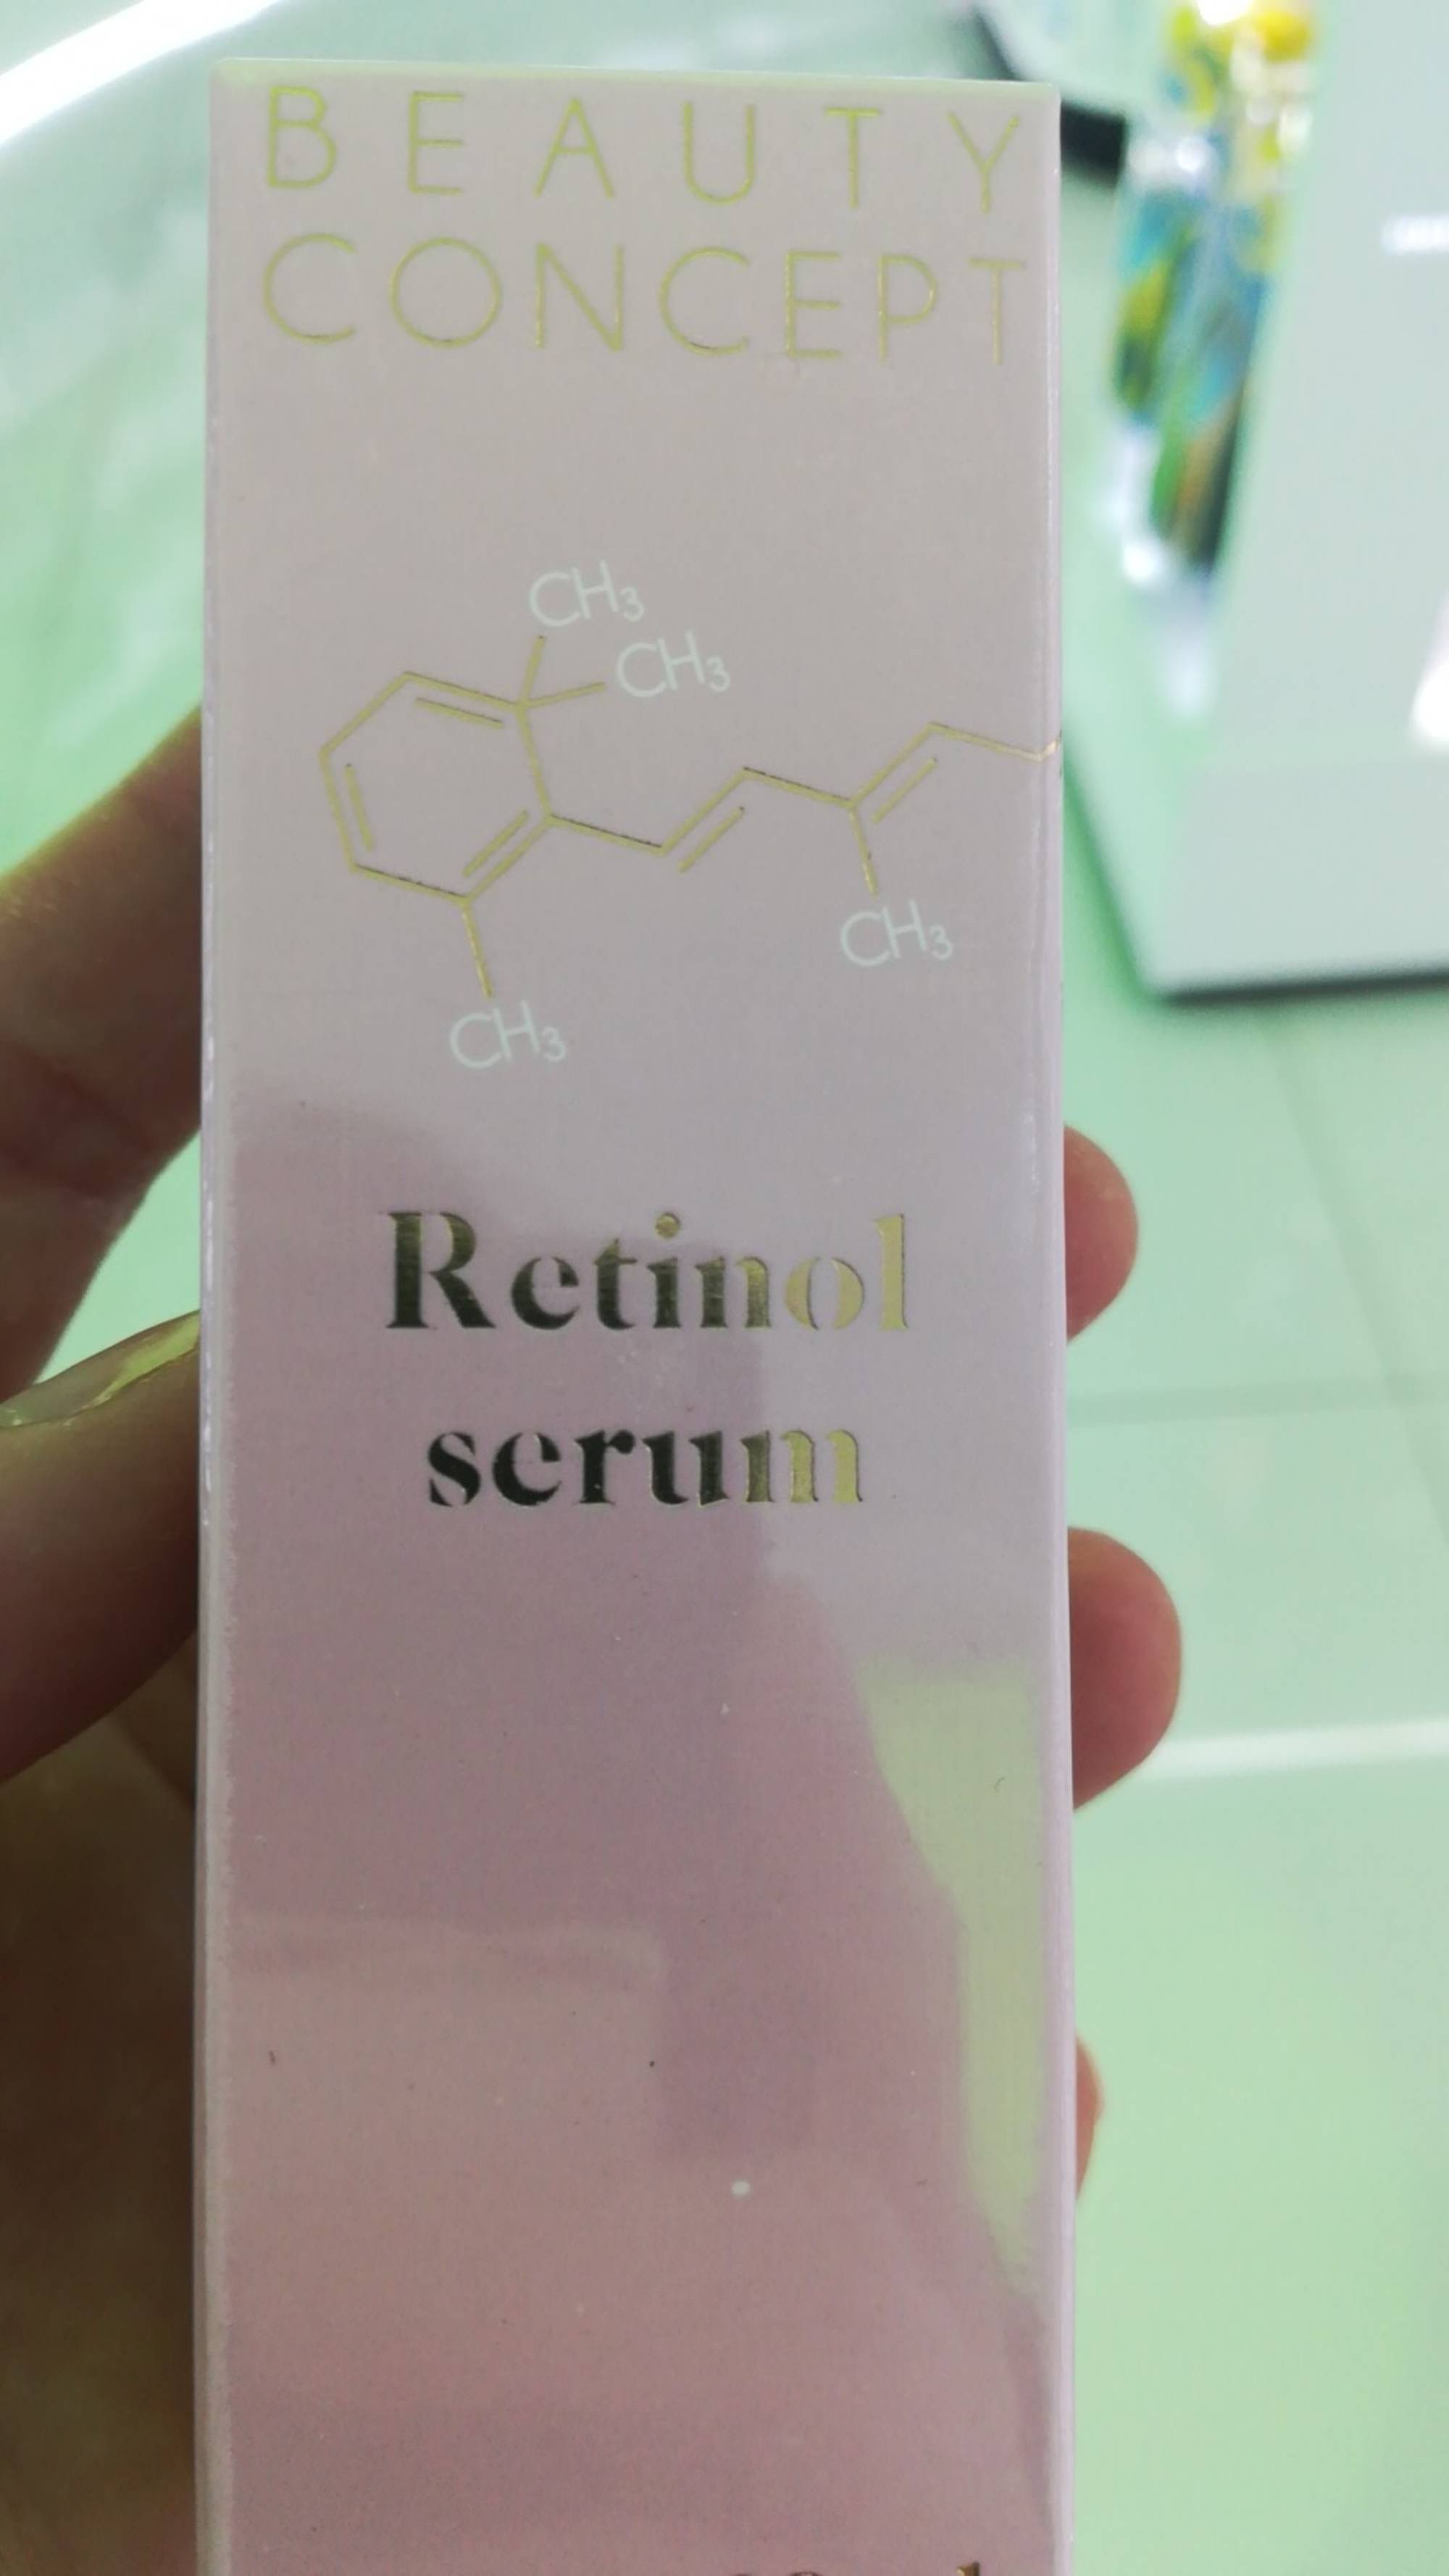 BEAUTY CONCEPT - Retinol serum